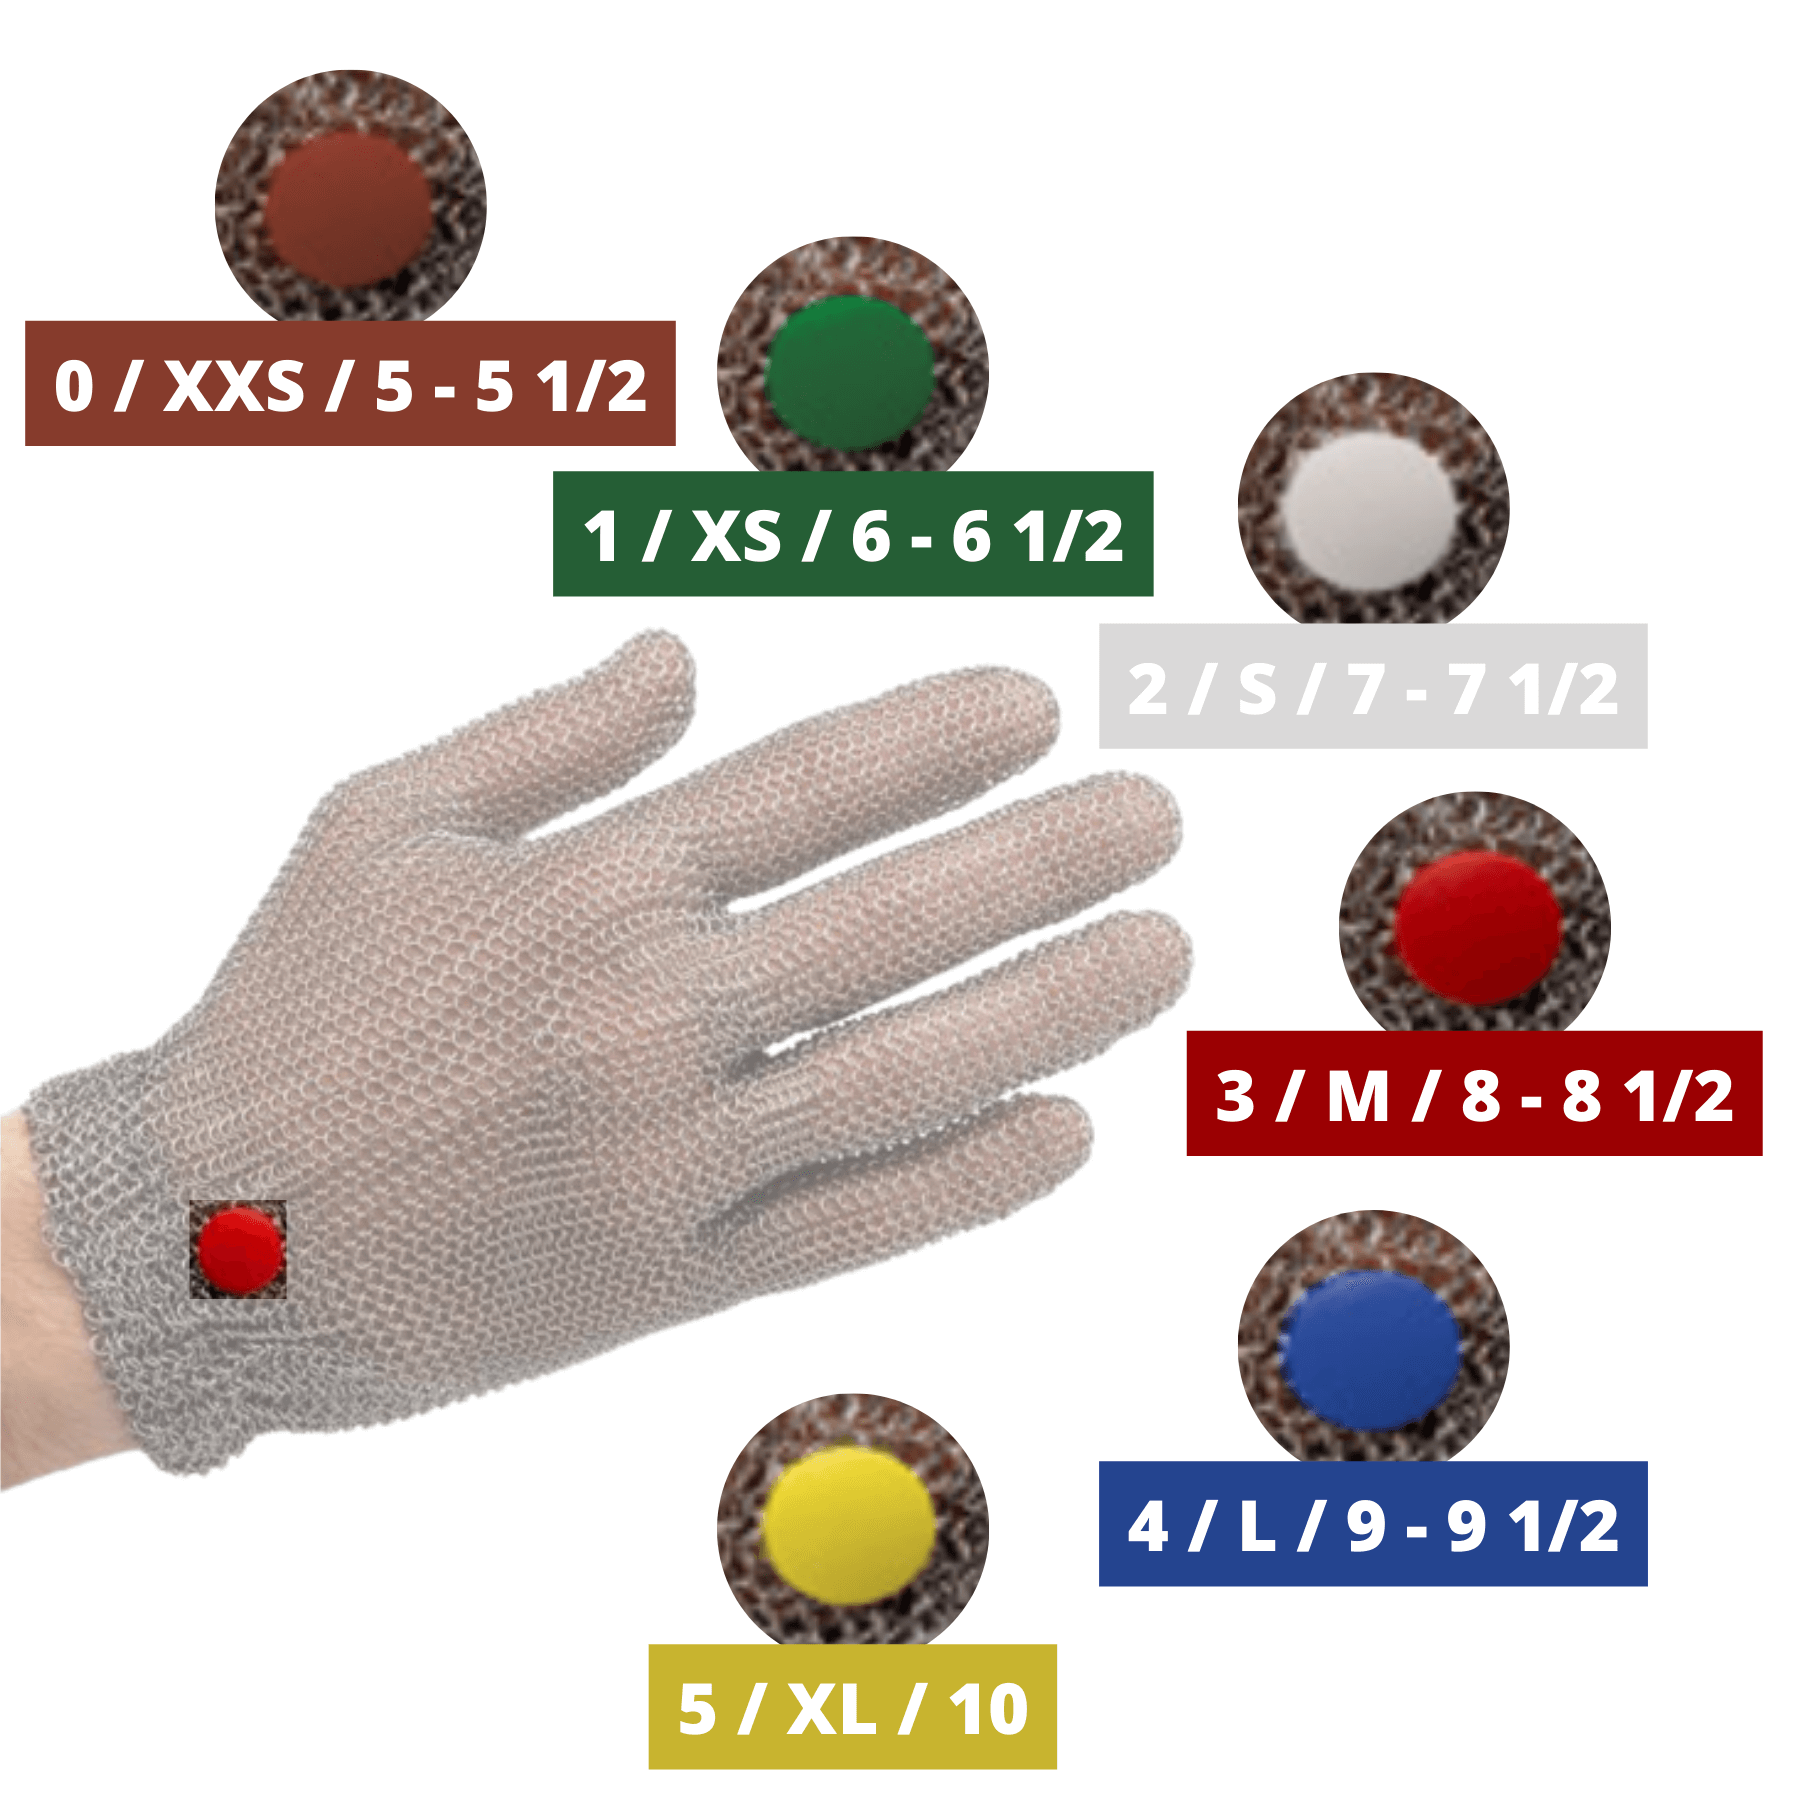 https://media3.burdis.fr/2491-thickbox_default/stainless-steel-metal-mesh-gloves.jpg